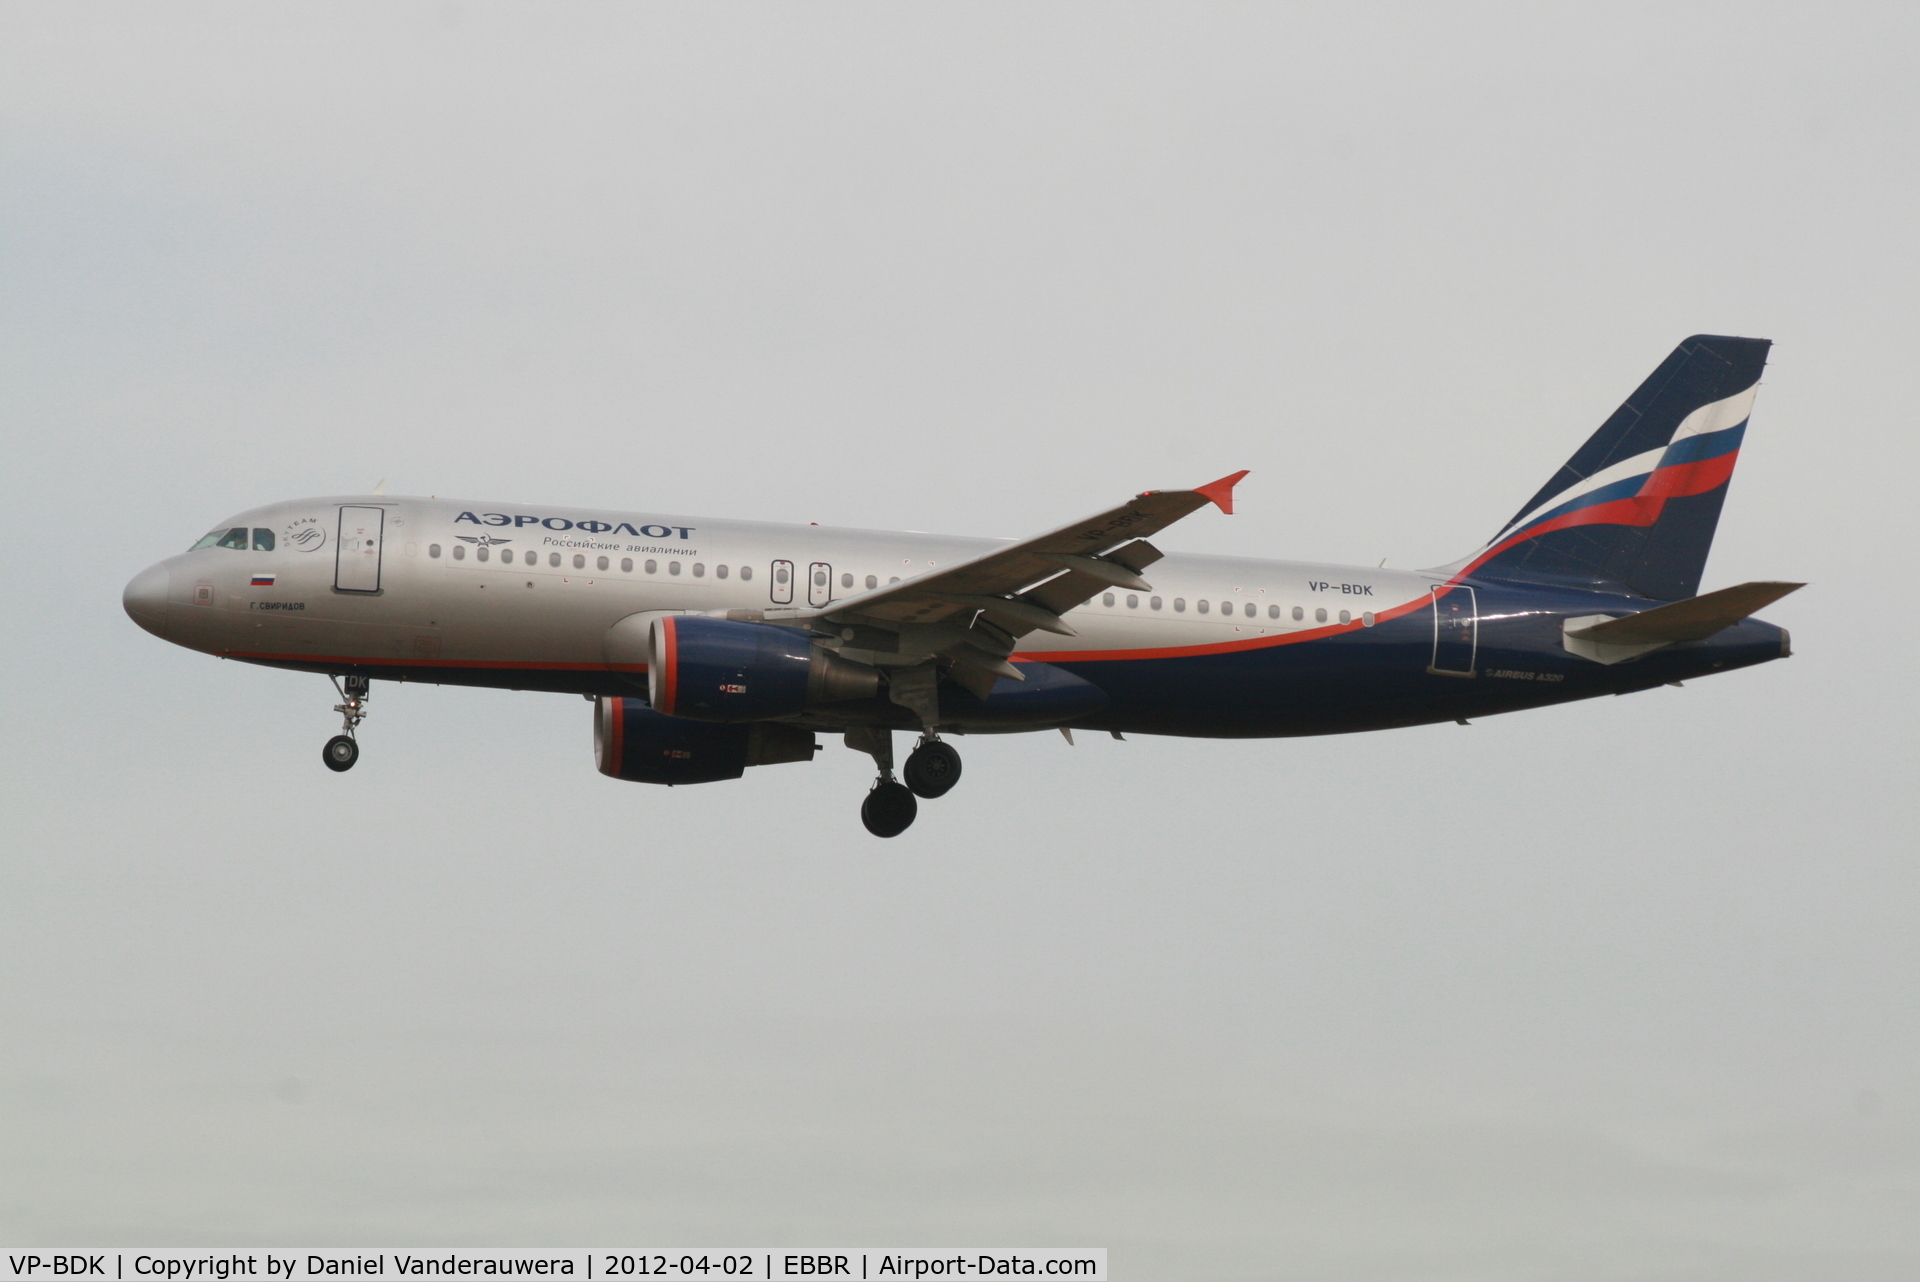 VP-BDK, 2003 Airbus A320-214 C/N 2106, Flight SU2560 is descending to RWY 25L